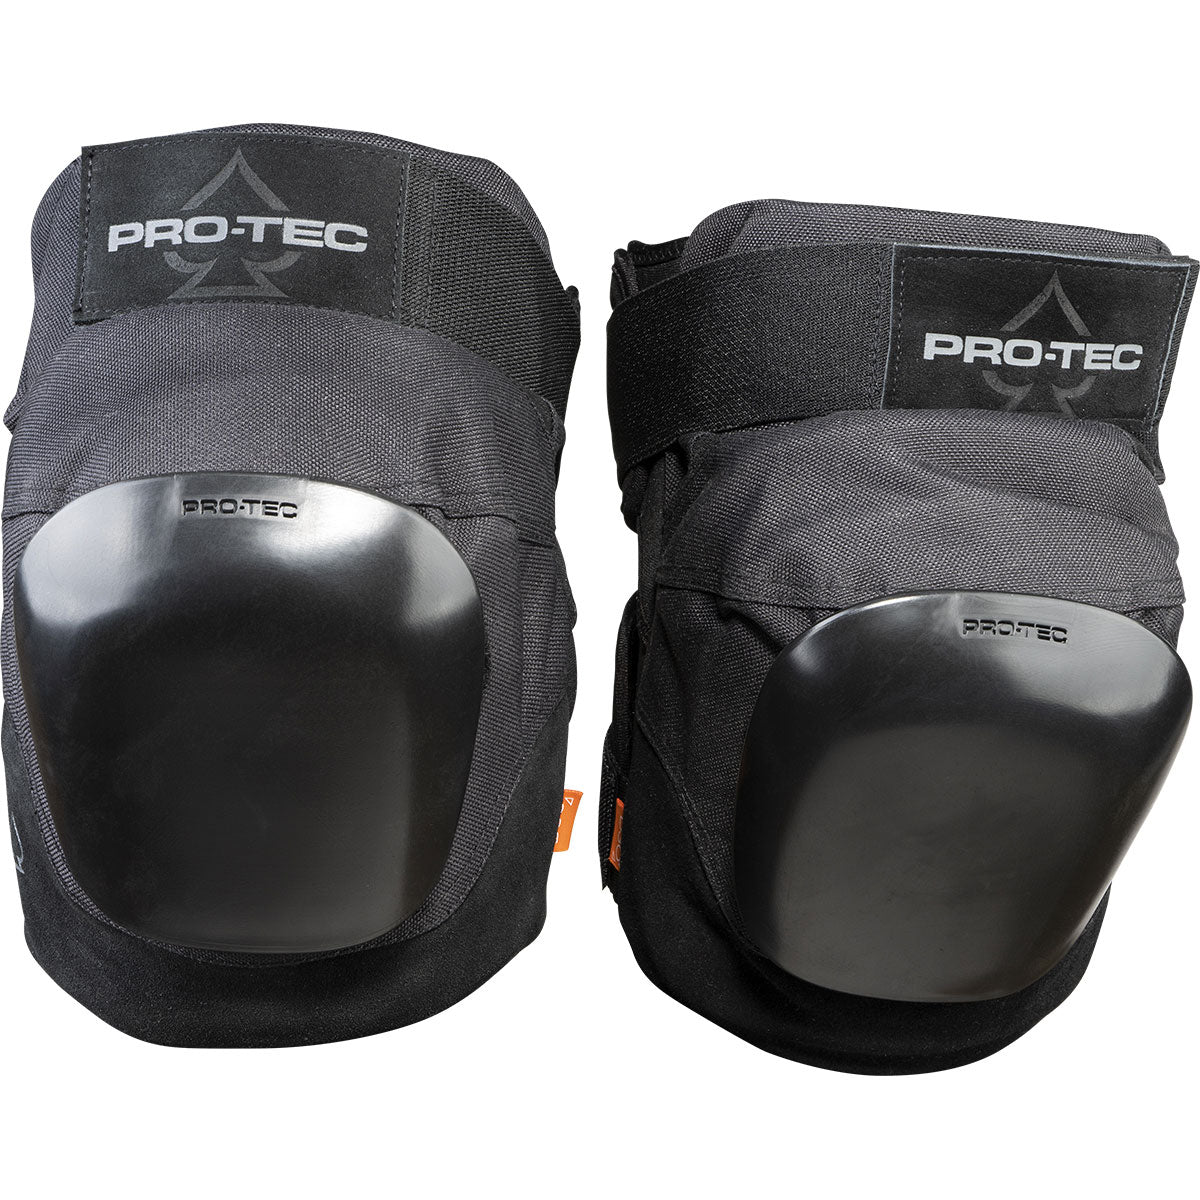 Pro-Tec Pro Knee Pads - Black image 1